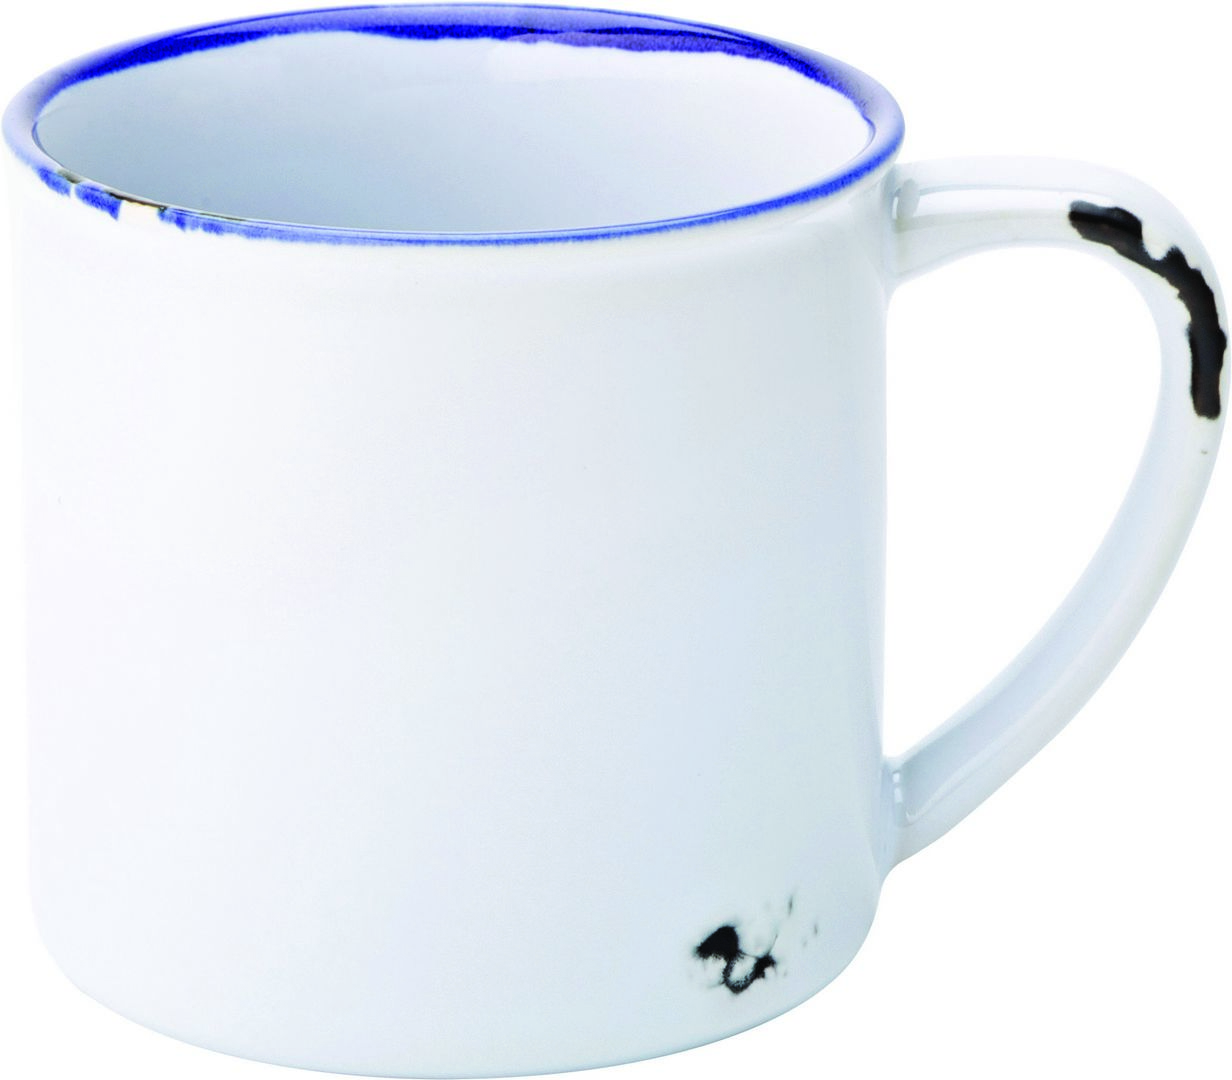 Avebury Blue Mug 10oz (28cl) - CT6000-000000-B01012 (Pack of 12)